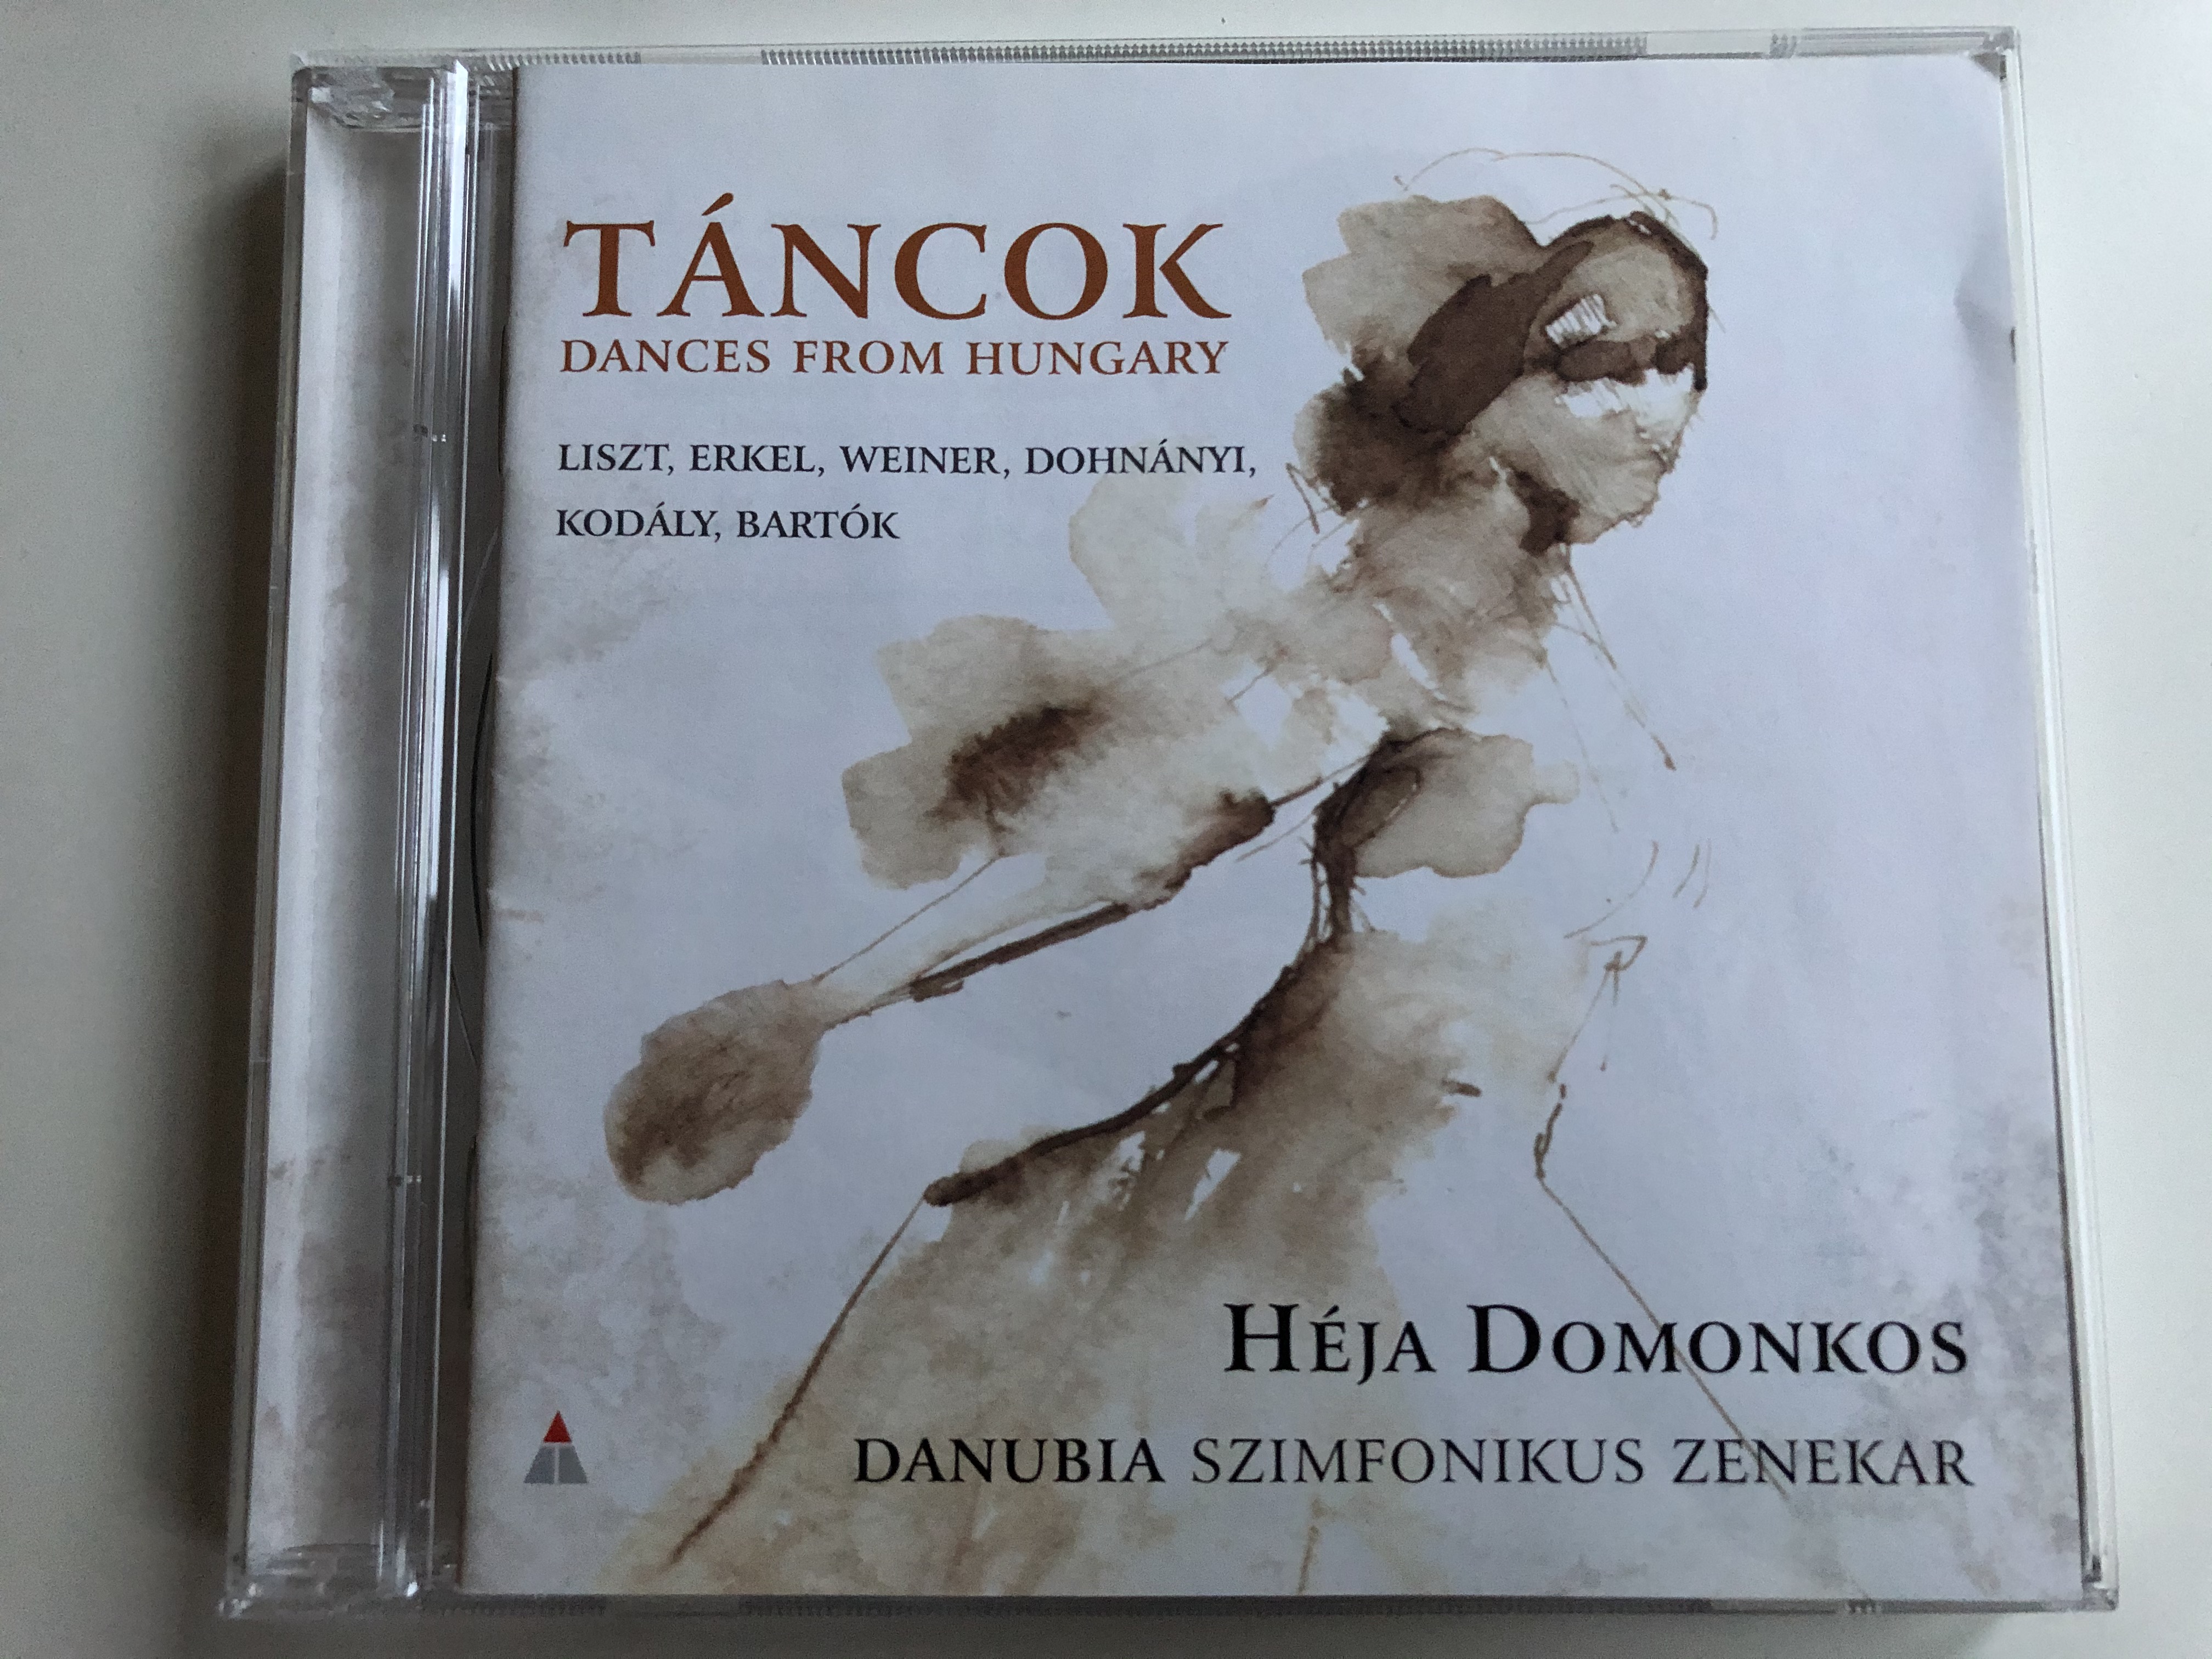 t-ncok-dances-from-hungary-liszt-erkel-weiner-dohn-nyi-kod-ly-bart-k-h-ja-domonkos-danubia-szimfonikus-zenekar-warner-music-audio-cd-2003-5050466935120-1-.jpg